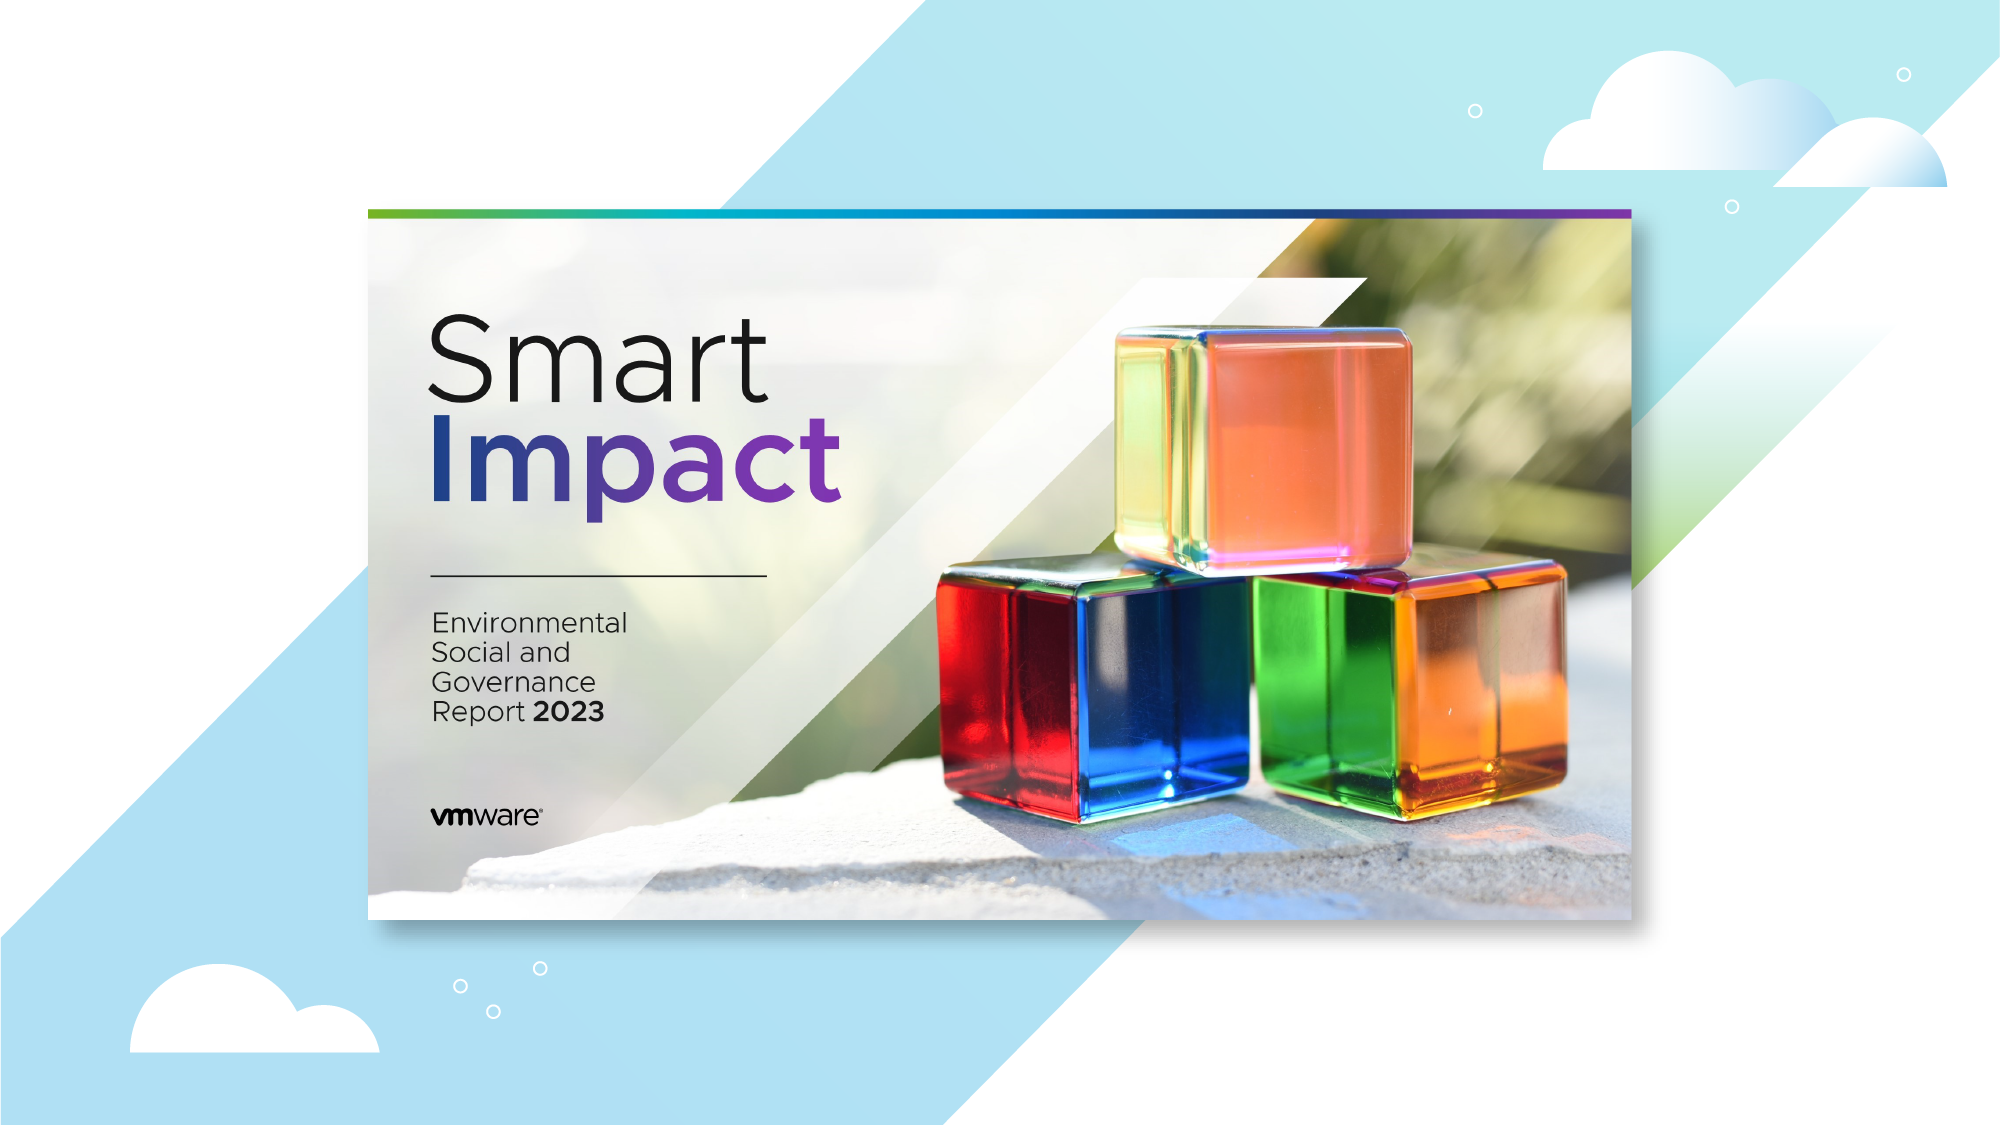 "Smart impact - Environmental social and governance report 2023"